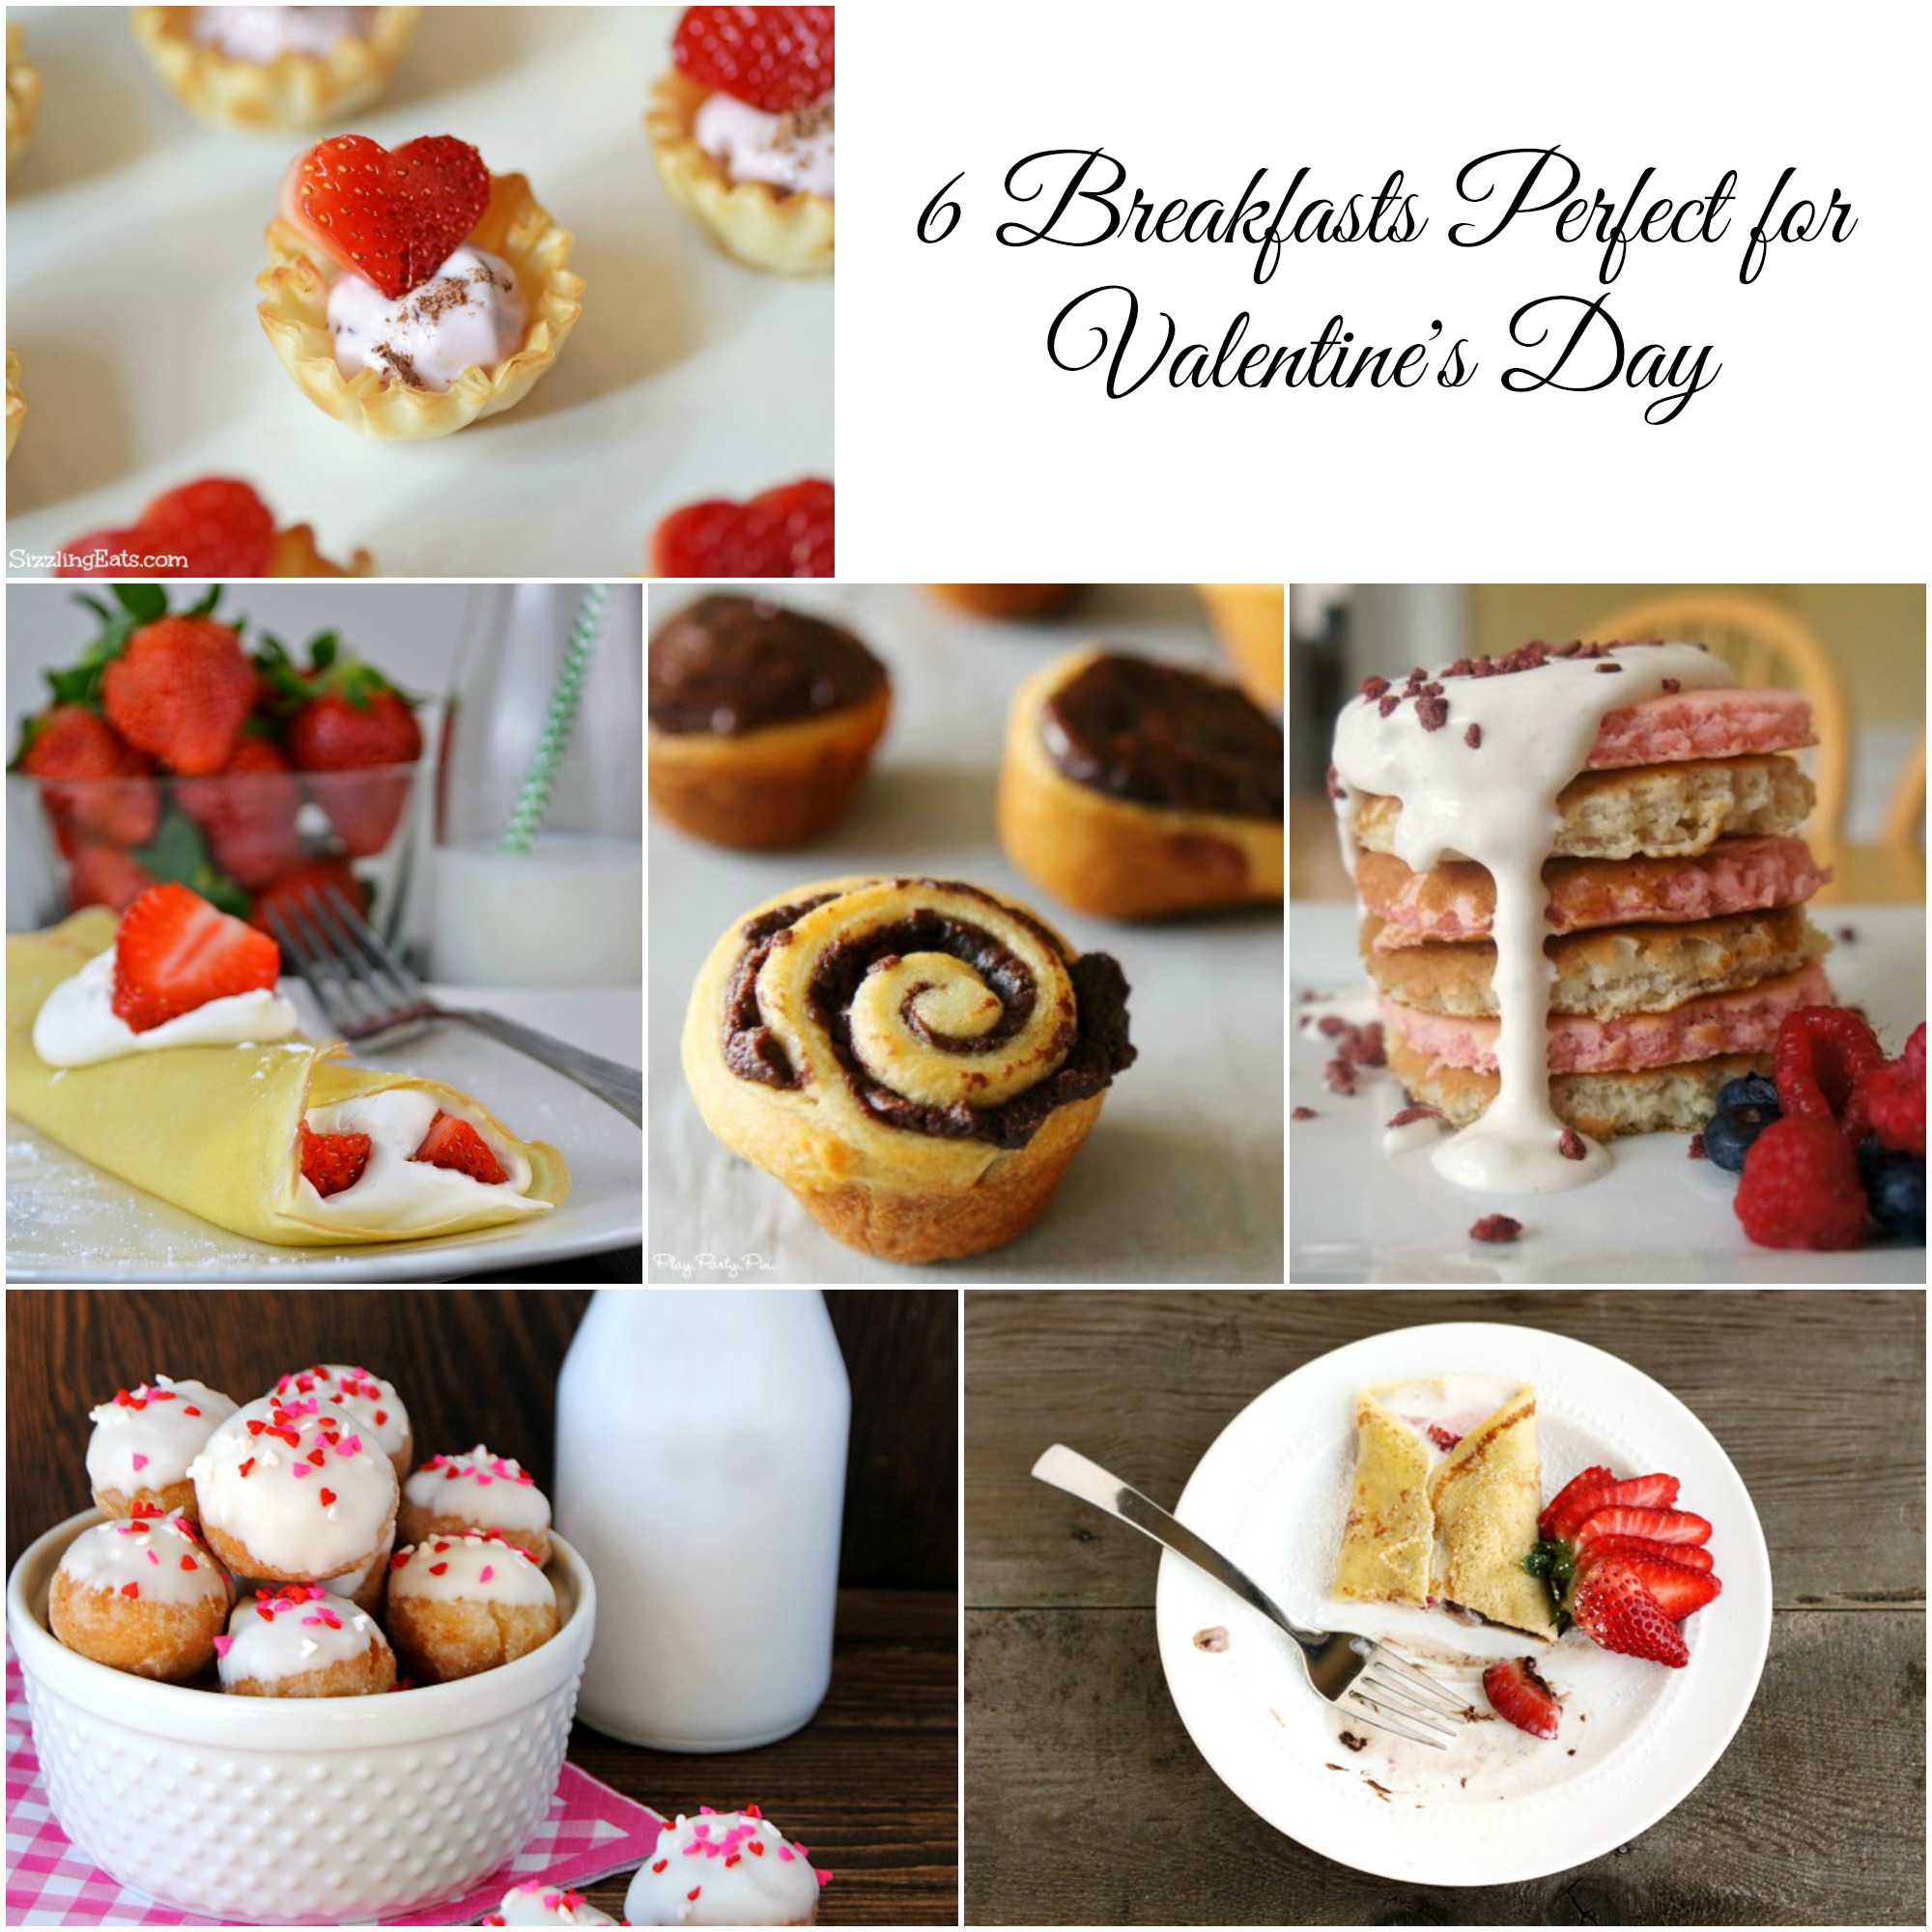 Valentine's breakfast ideas, Valentine's food